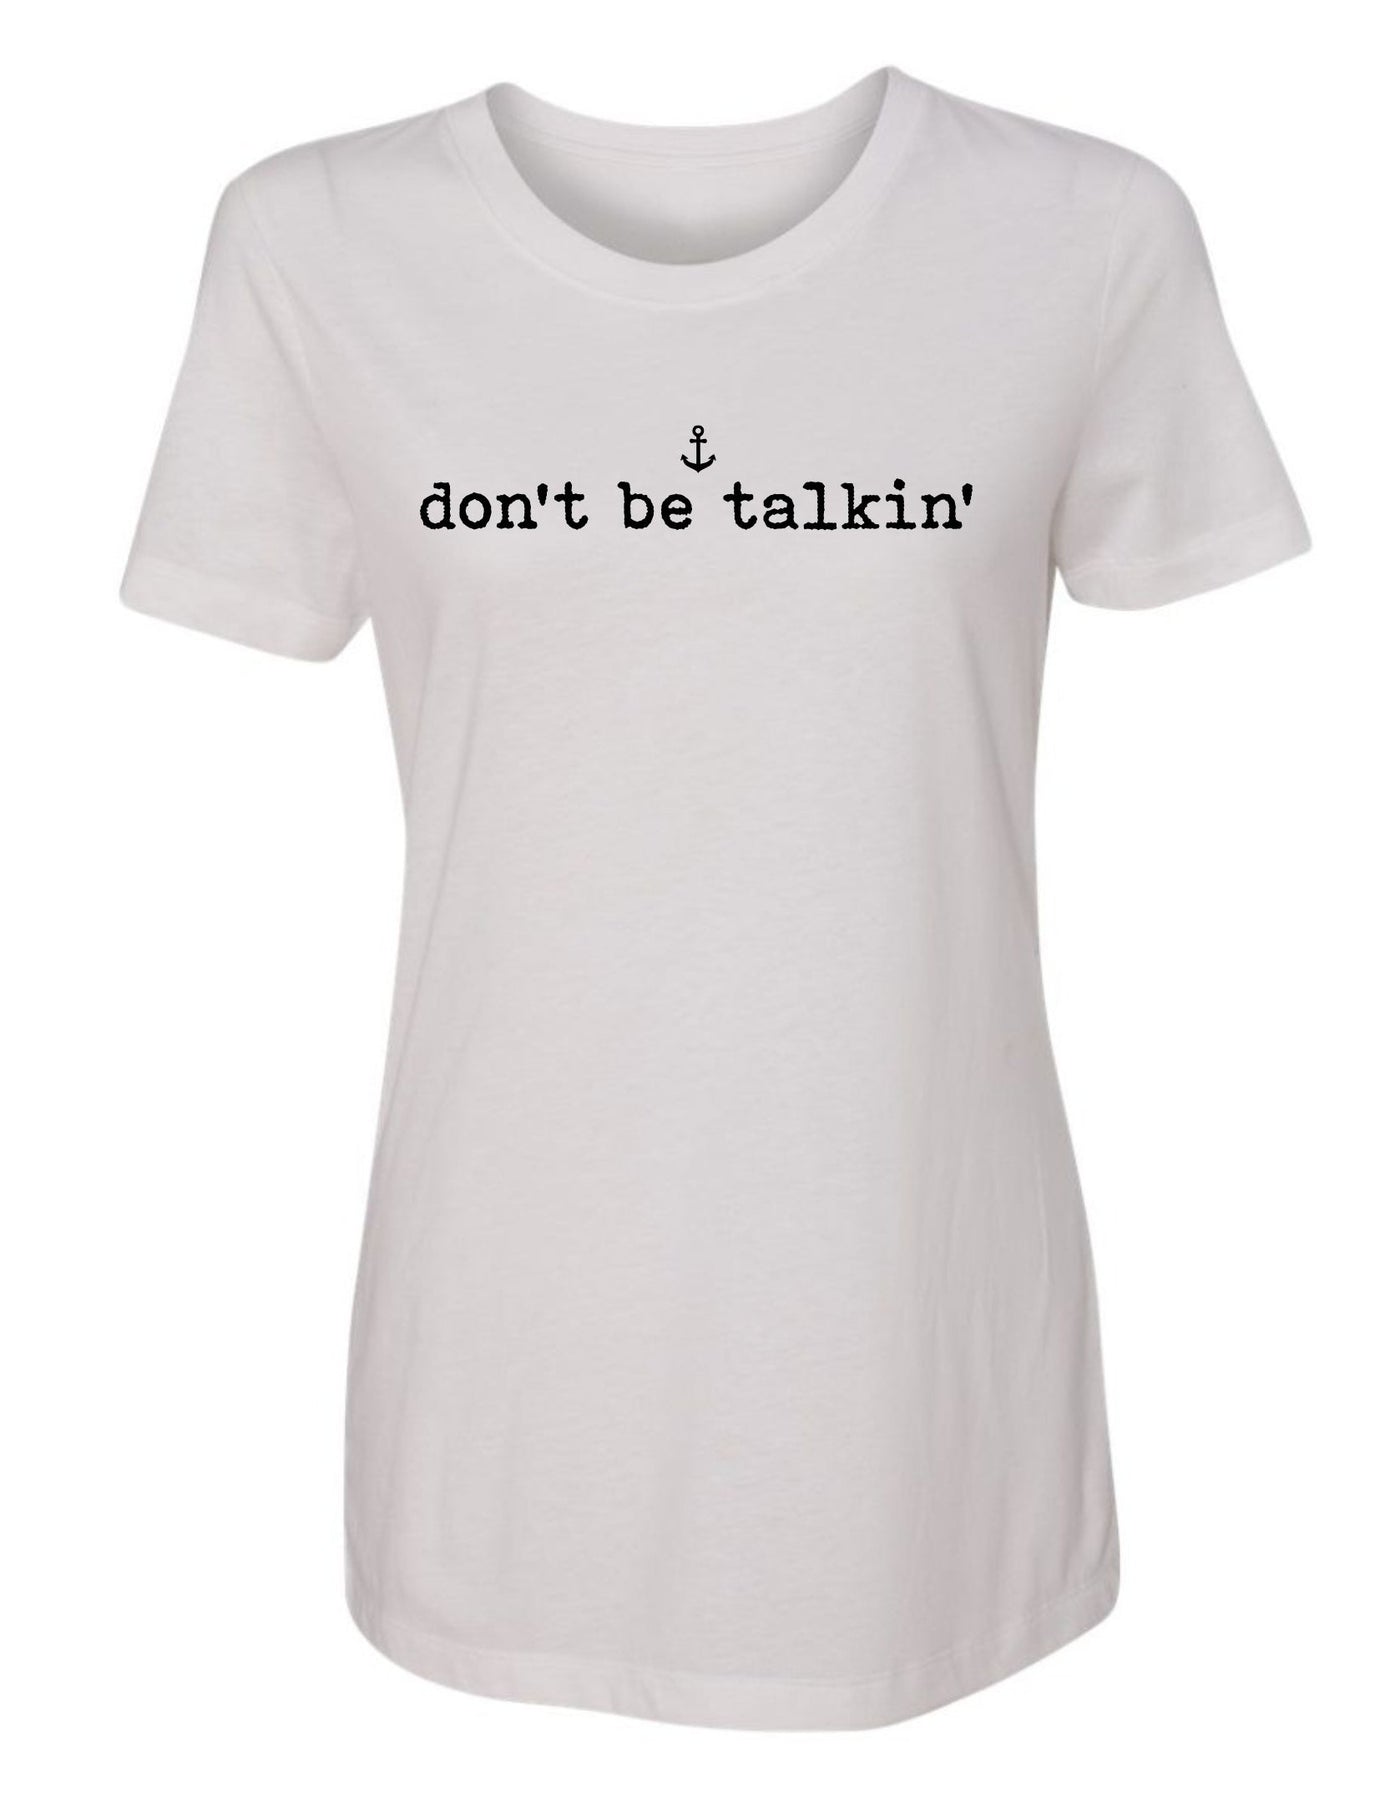 "Don't Be Talkin'" T-Shirt